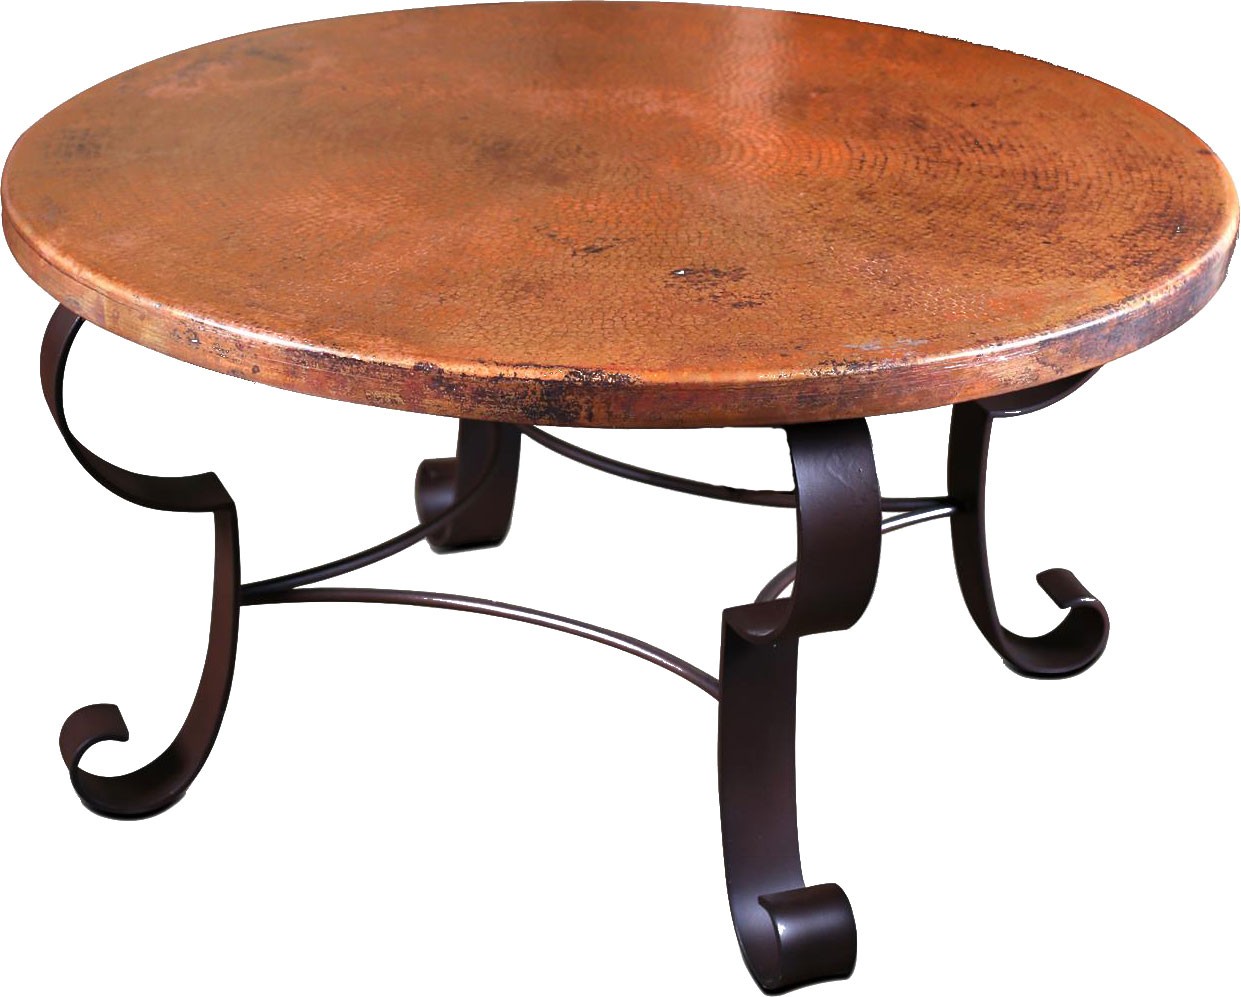 Copper coffee table round copper coffee table